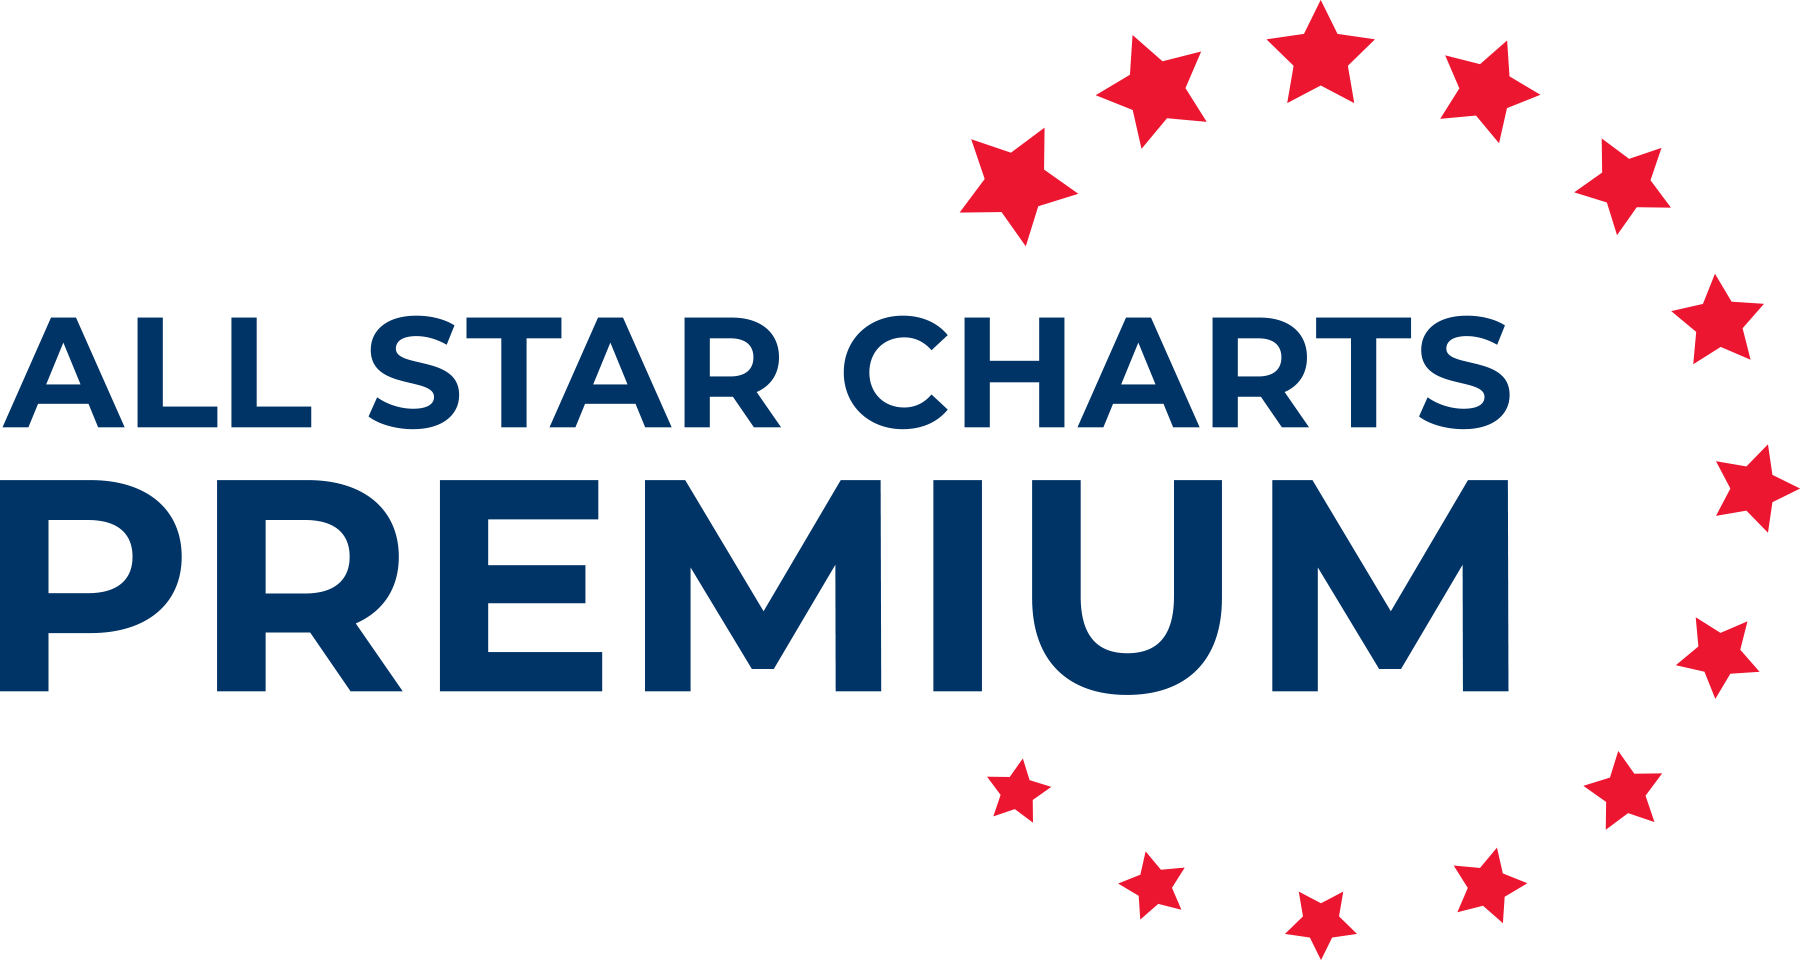 All Star Charts Premium Logo